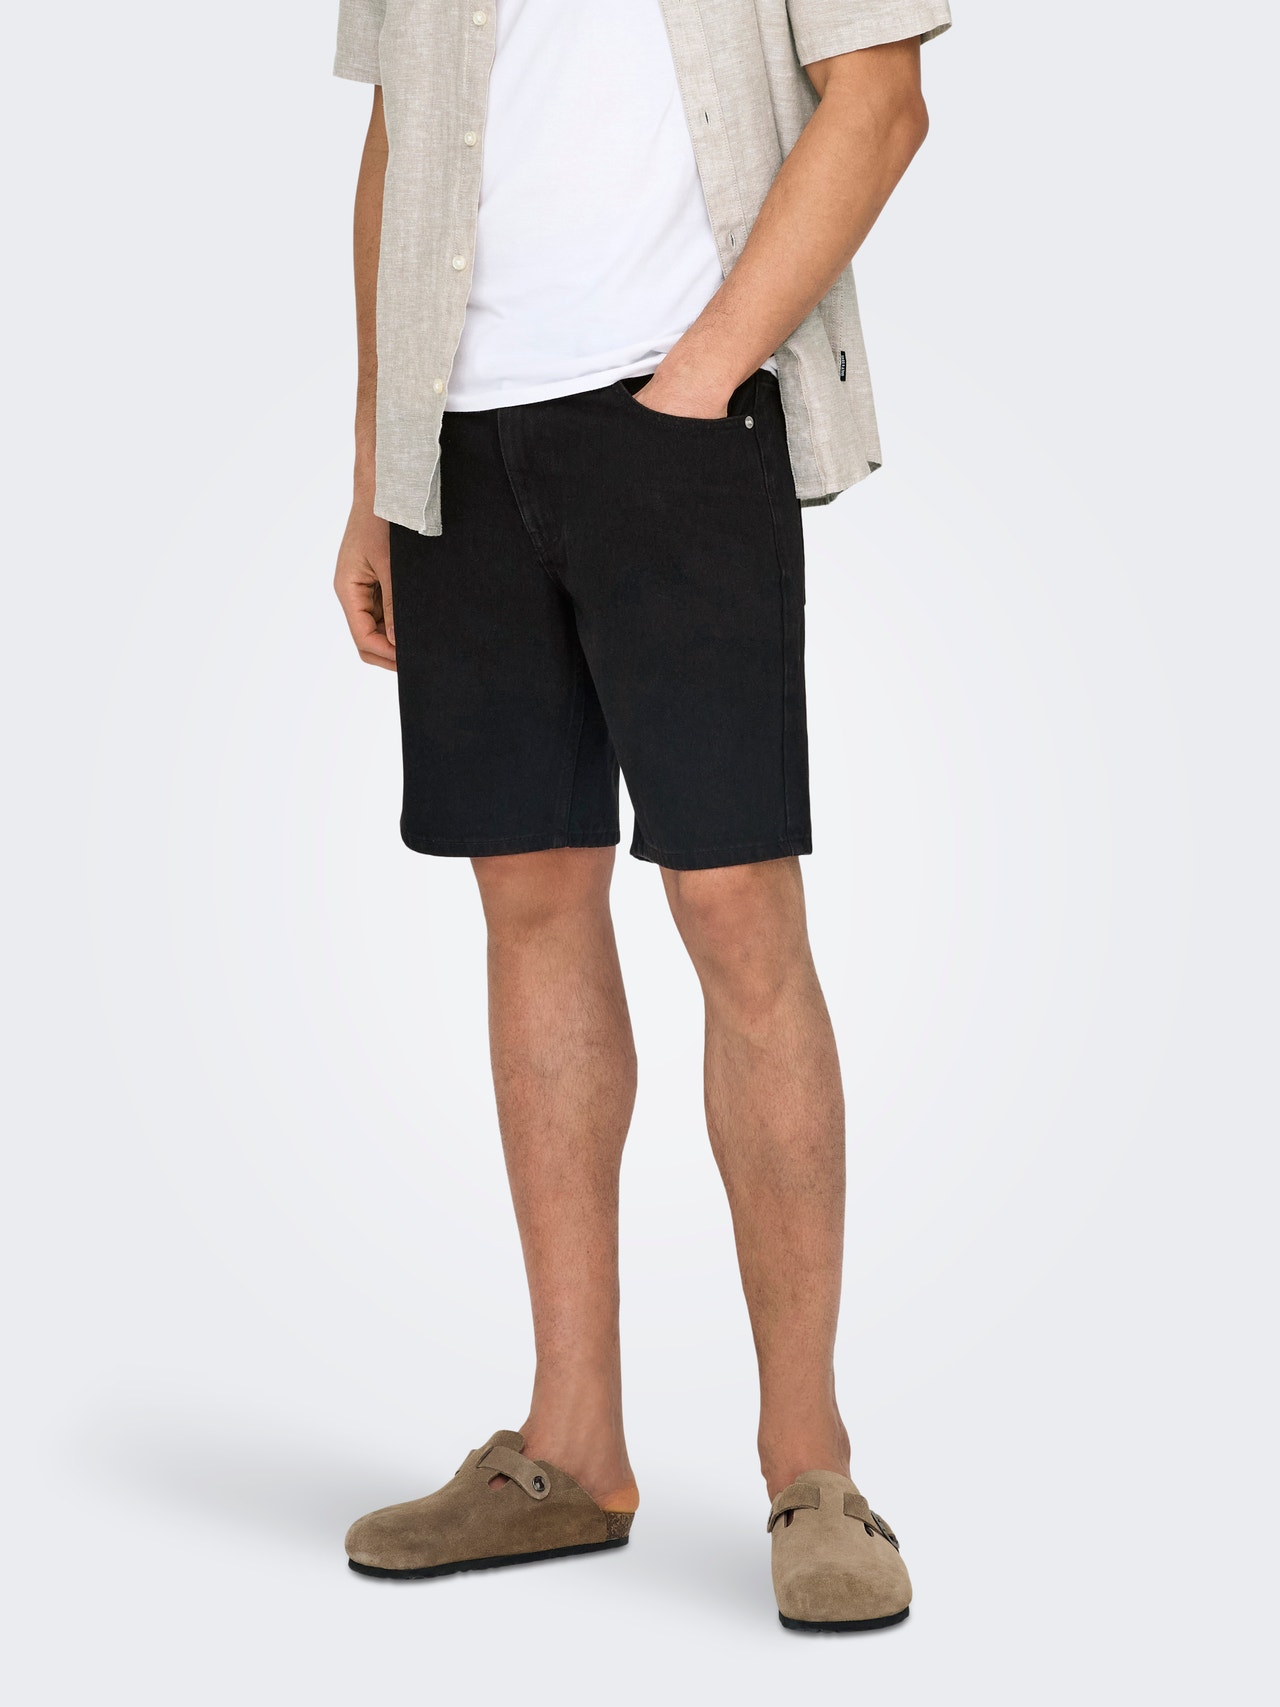 ONLY & SONS Regular Fit Mid waist Shorts -Black Denim - 22028012